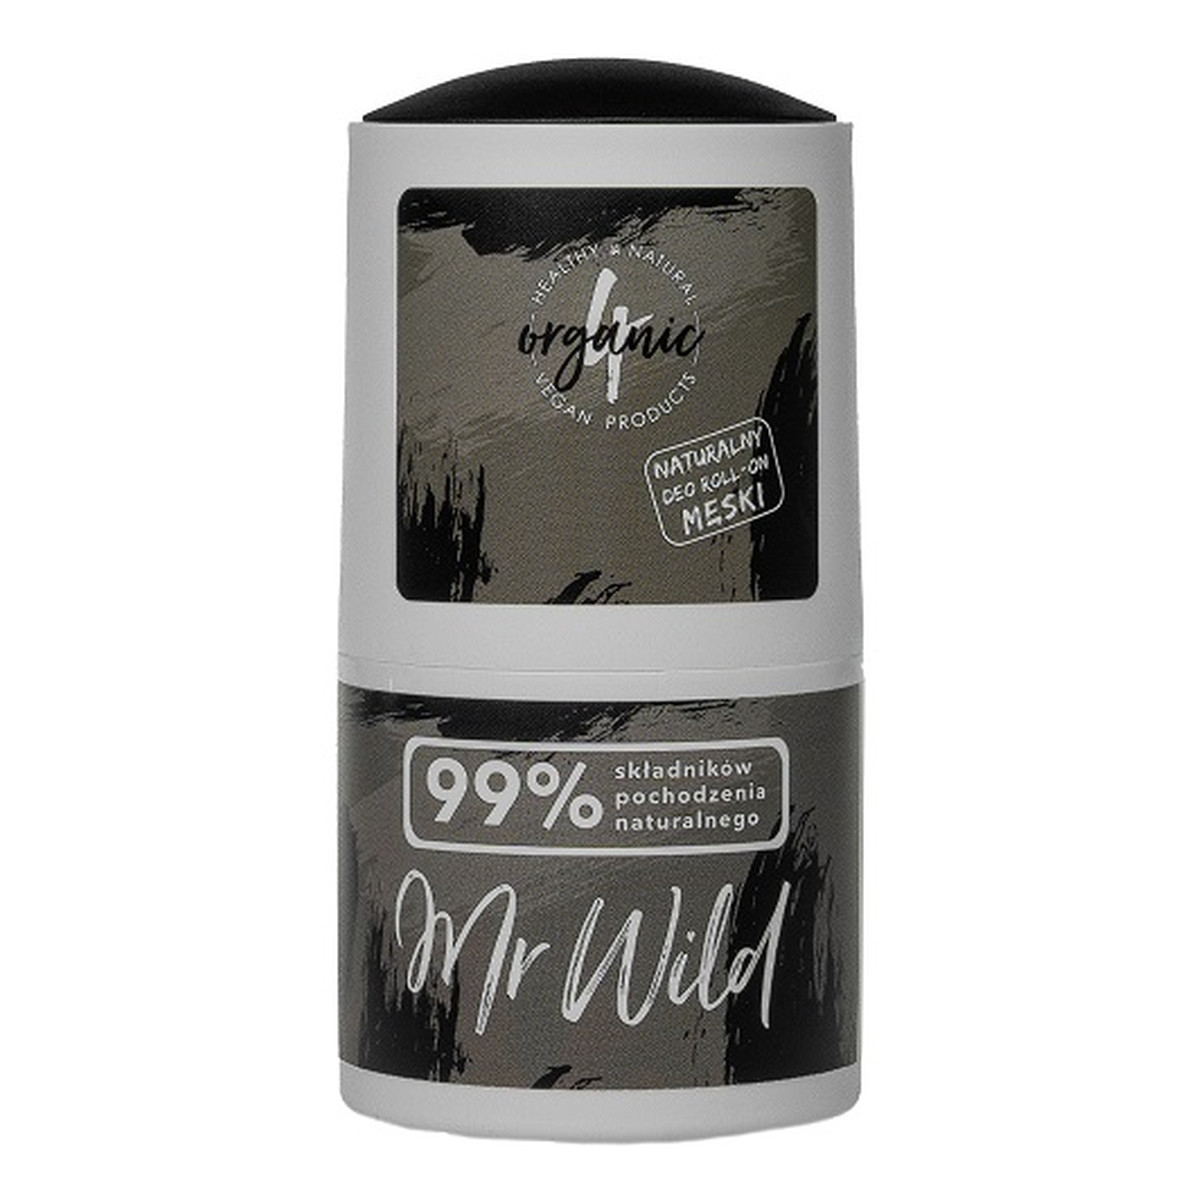 4organic Mr Wild naturalny Mr Wild naturalny dezodorant w kulce cyprysowo-imbirowy 50ml